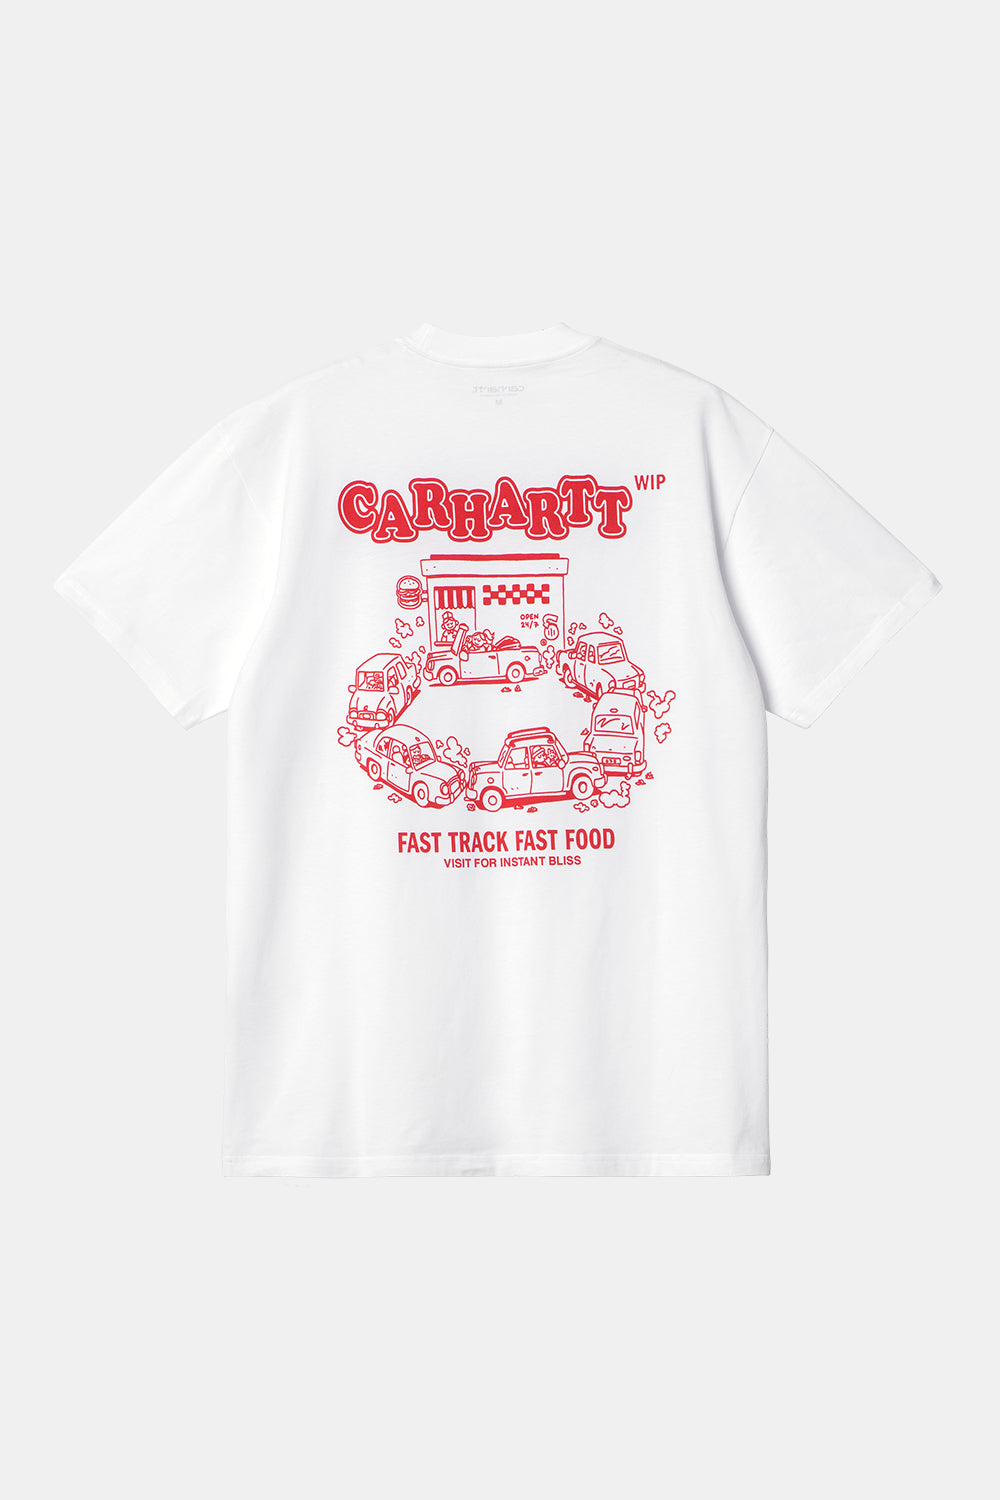 Carhartt WIP Short Sleeve Fast Food T-Shirt (White)
